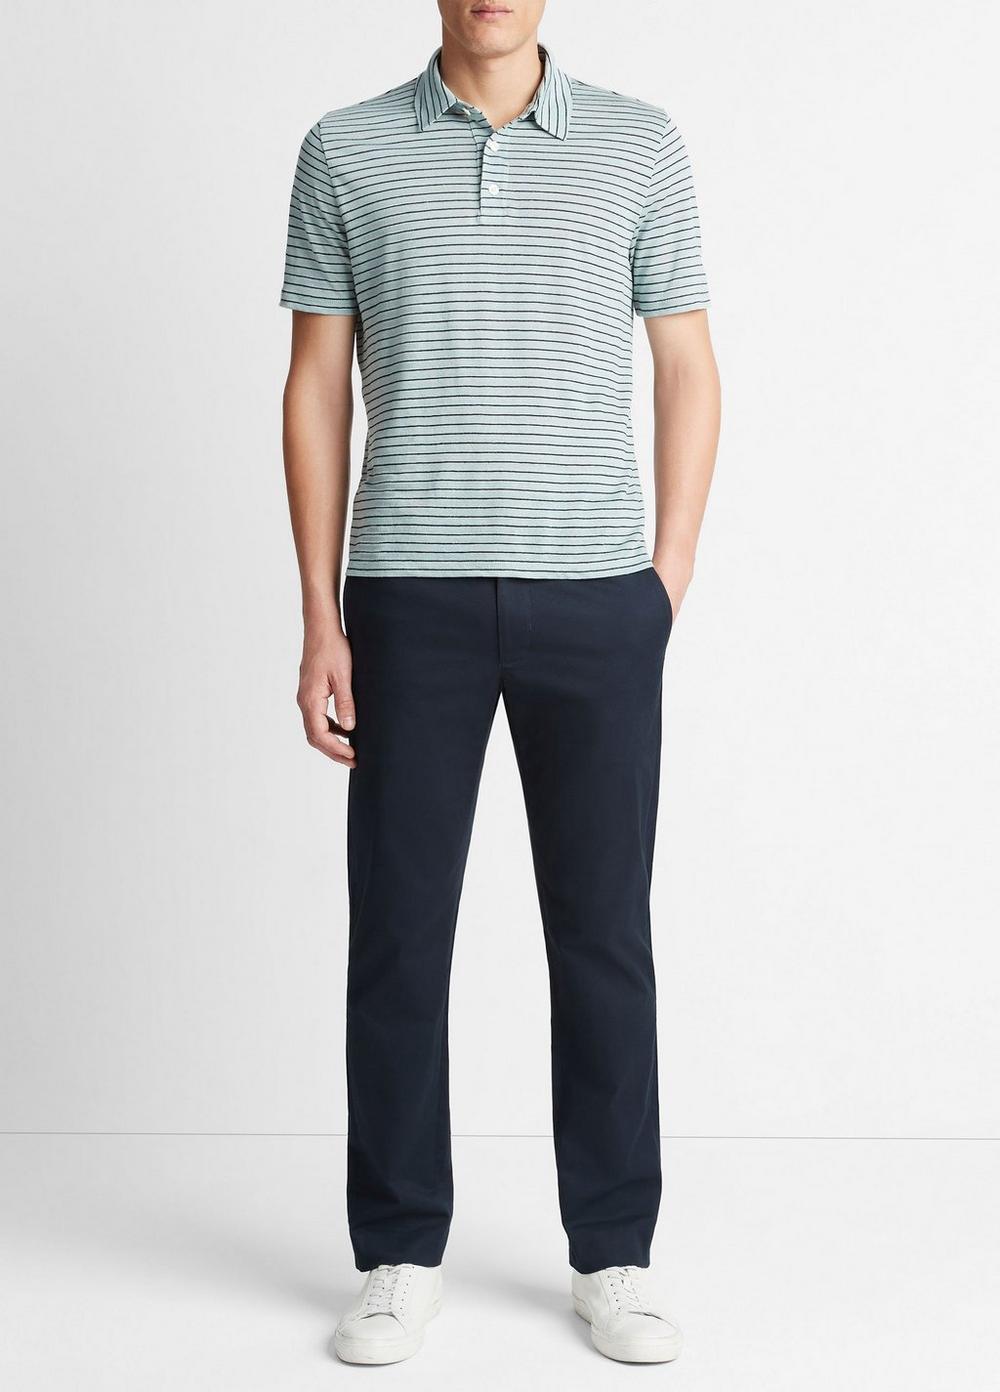 Striped Linen Short-Sleeve Polo Shirt, Ceramic Blue/coastal Blue, Size M Vince